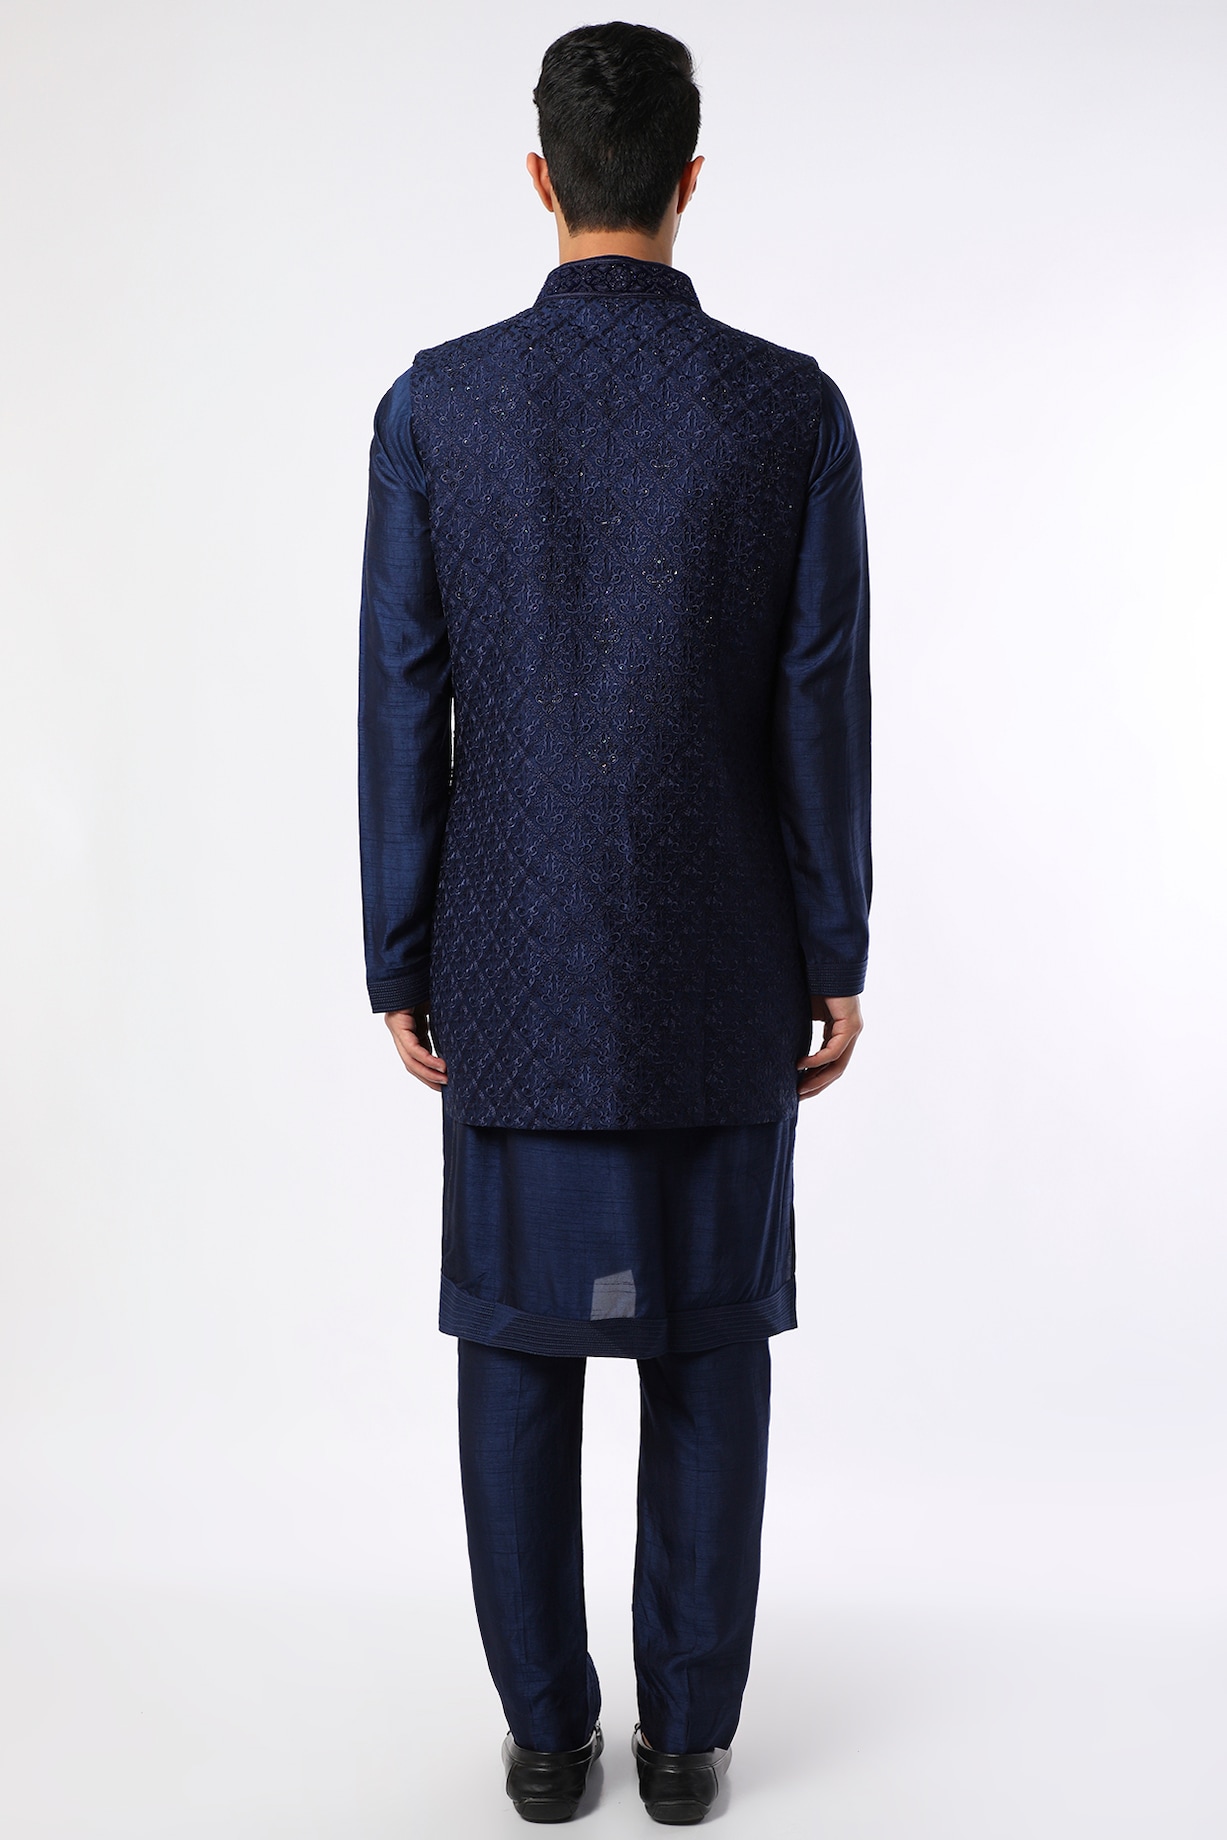 Blue Embroidered Bundi Jacket With Kurta Set by Vanshik